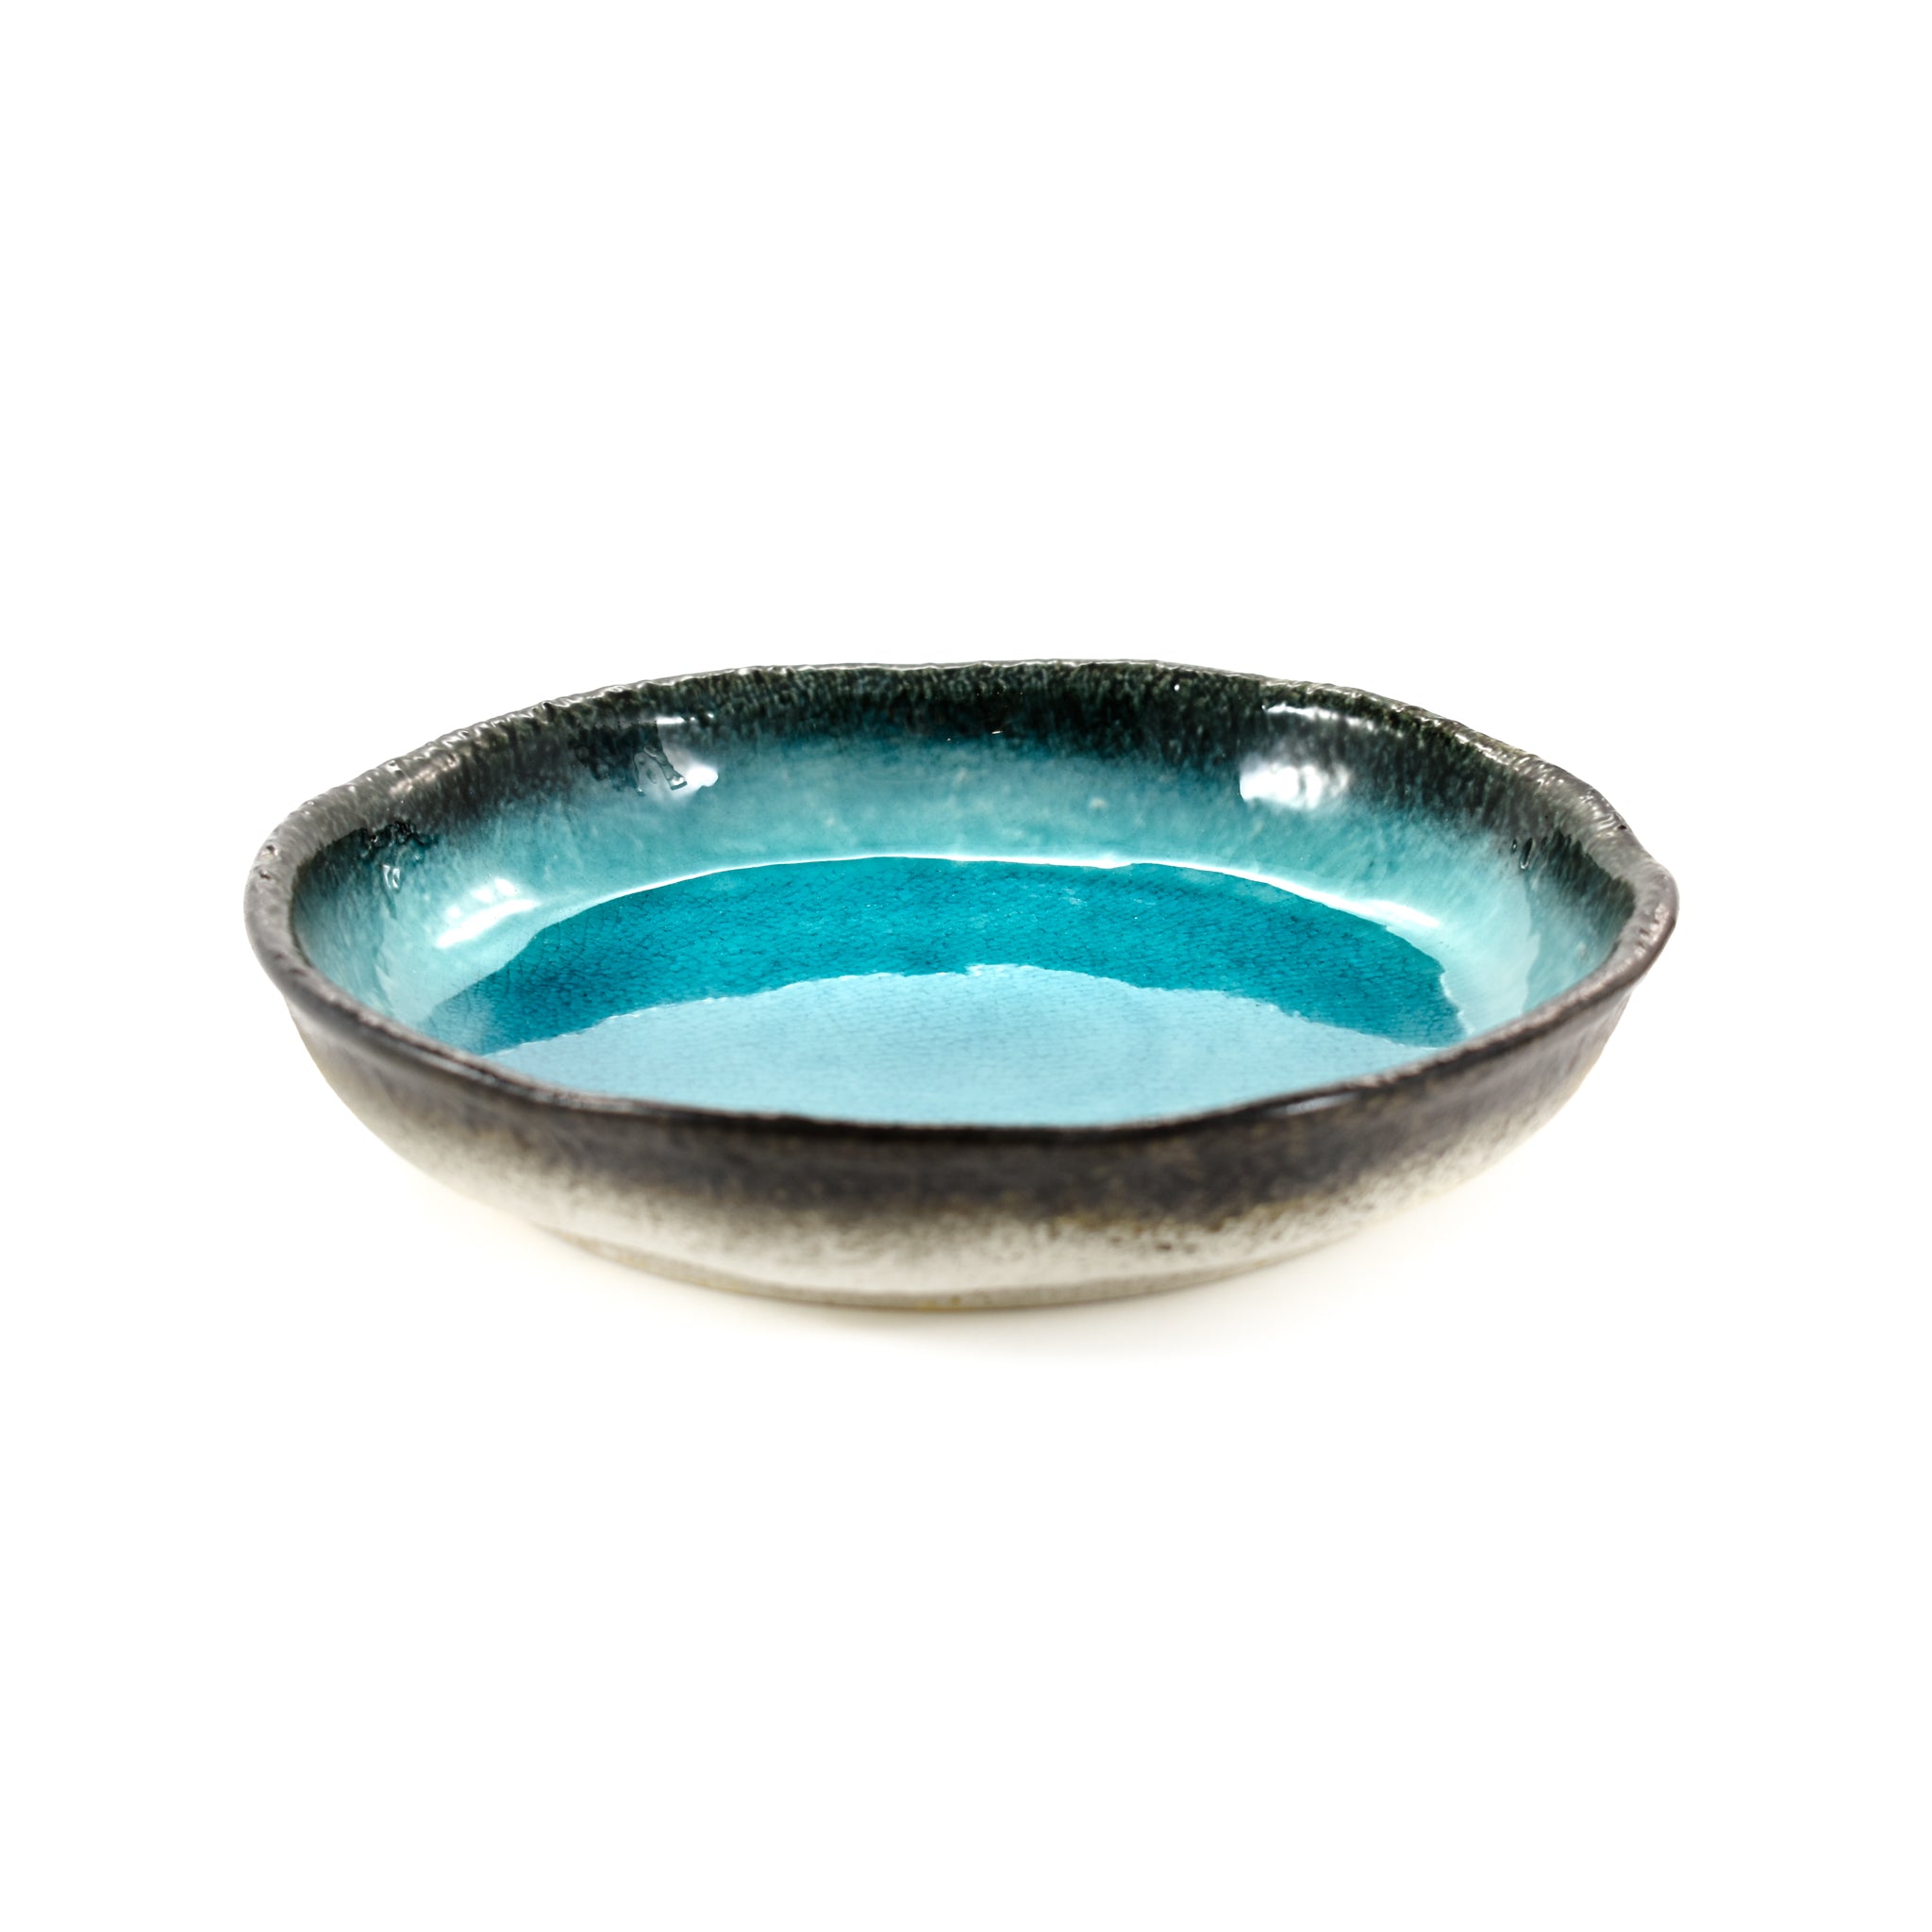 New blue glazed porcelain tableware turquoise